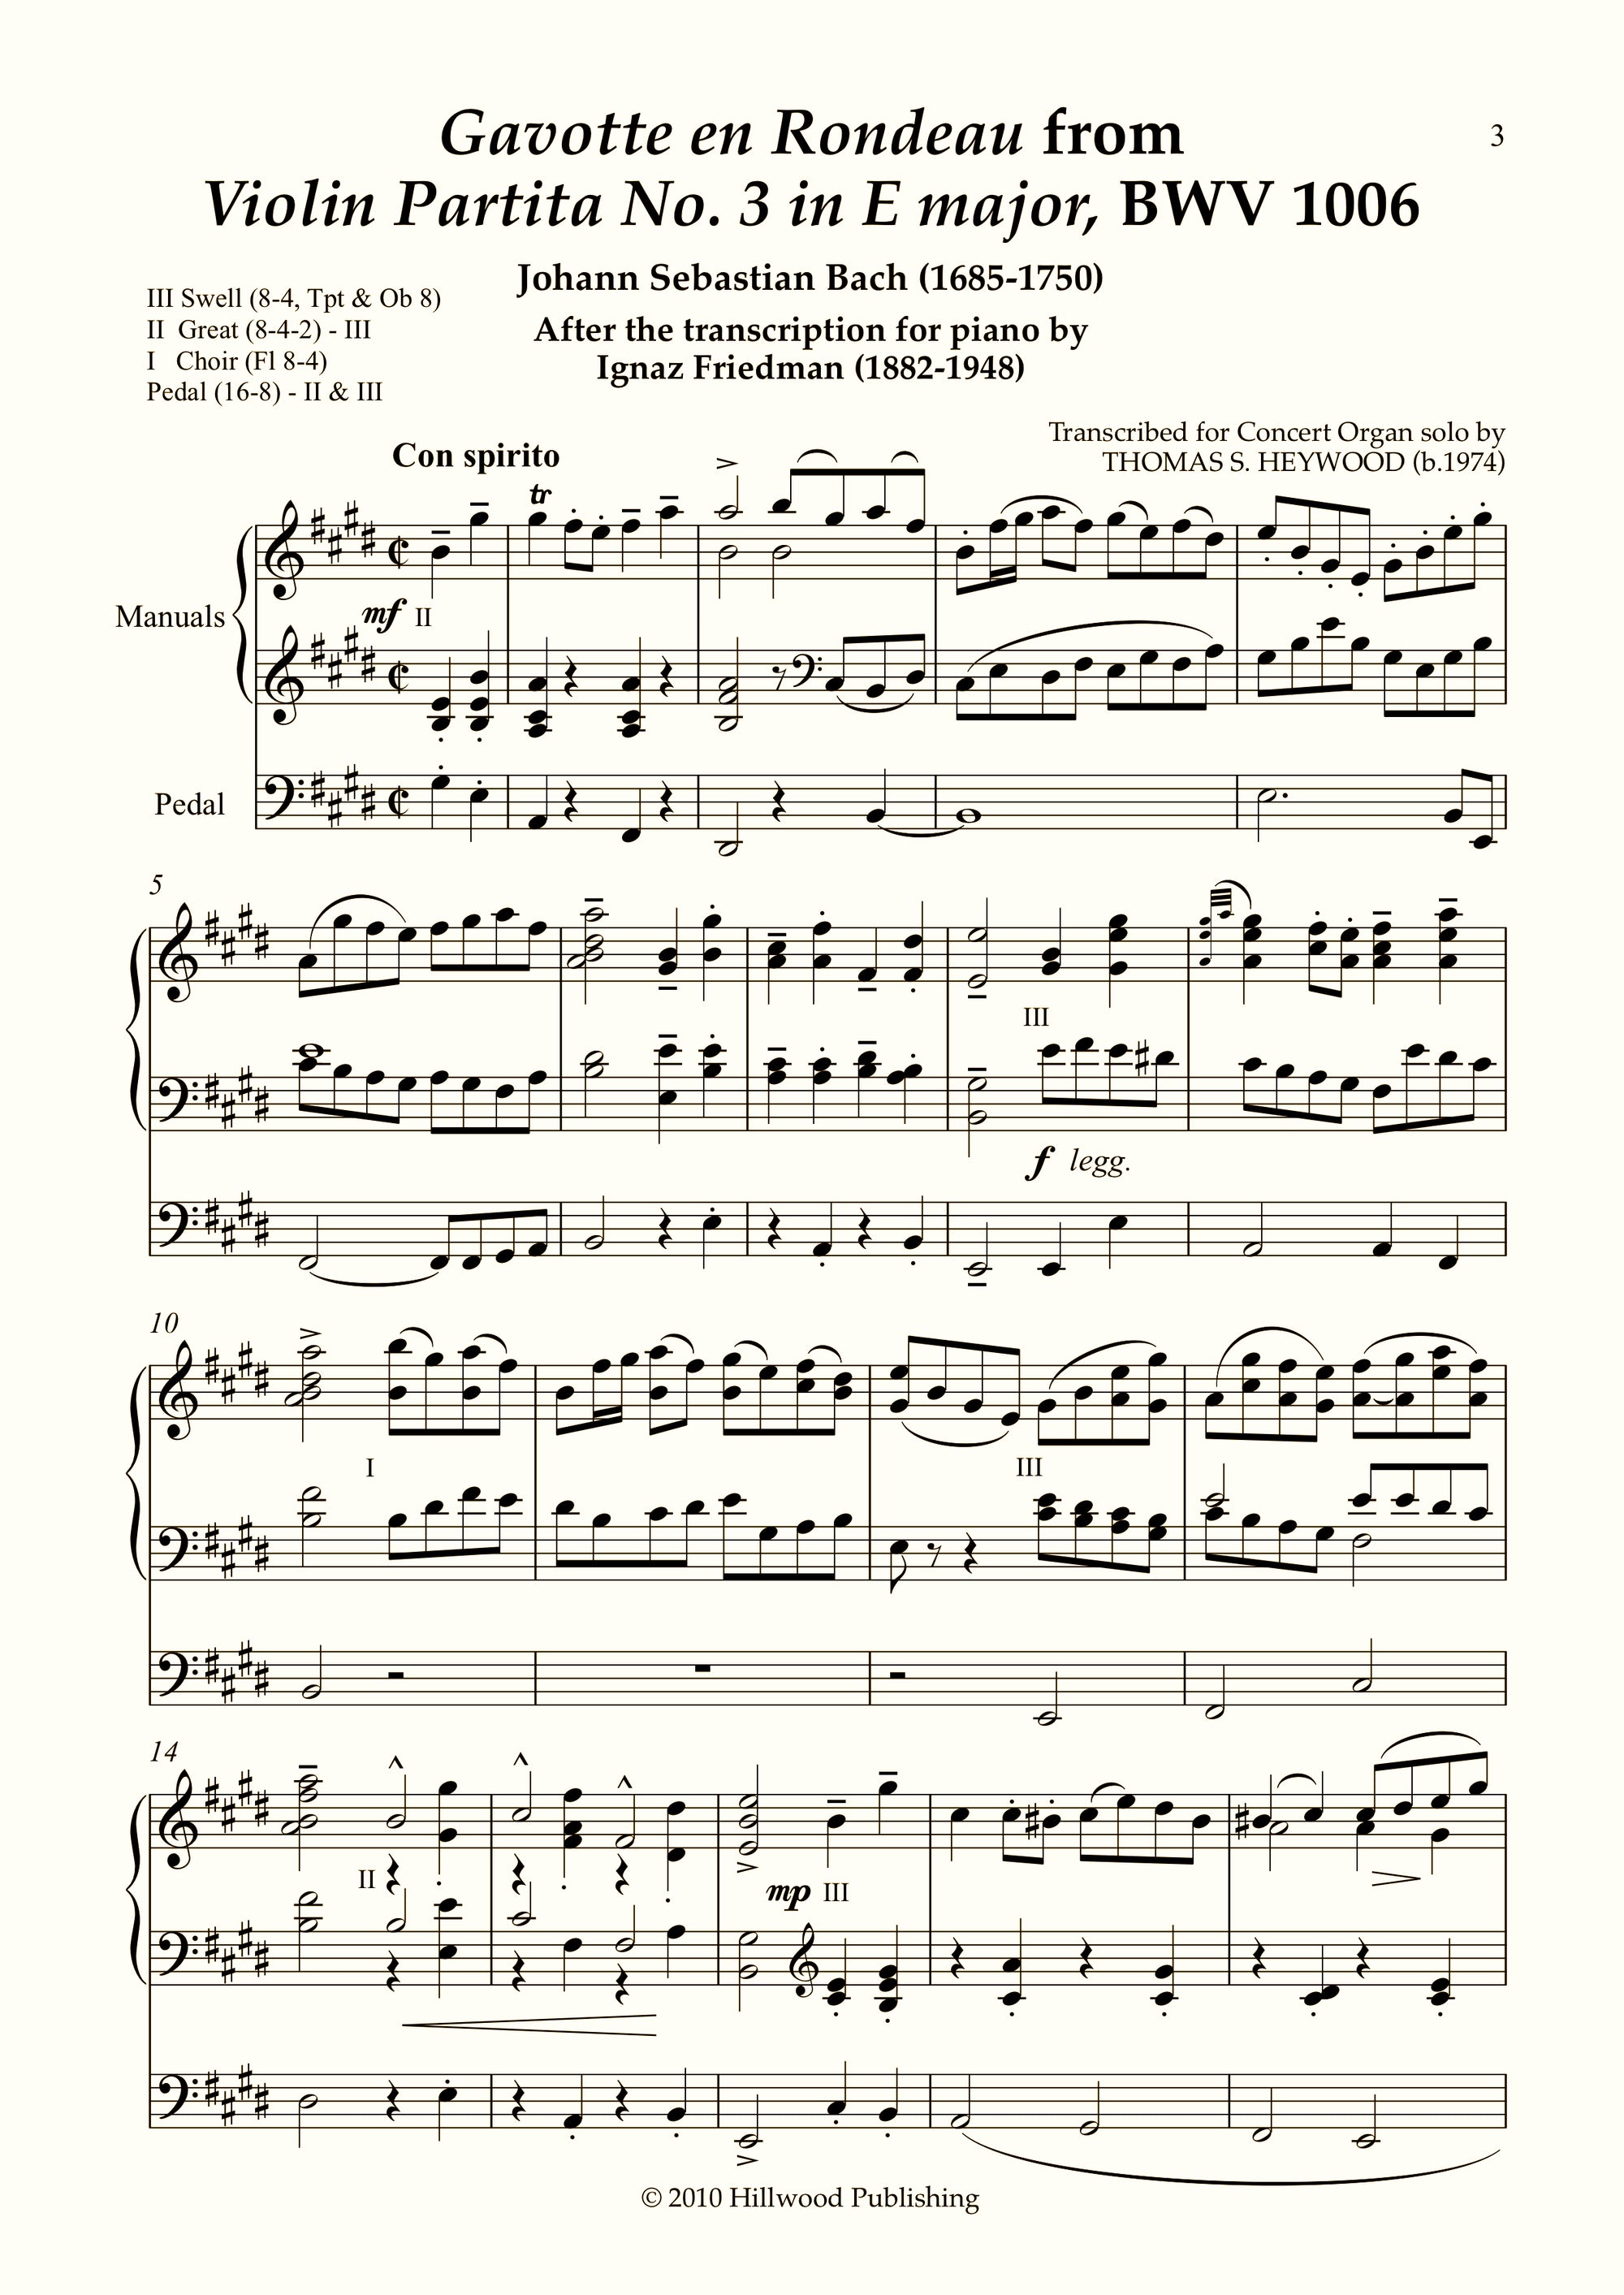 Bach/Heywood - Gavotte en Rondeau from Violin Partita No. 3 in E major, BWV 1006 (Score) | Thomas Heywood | Concert Organ International